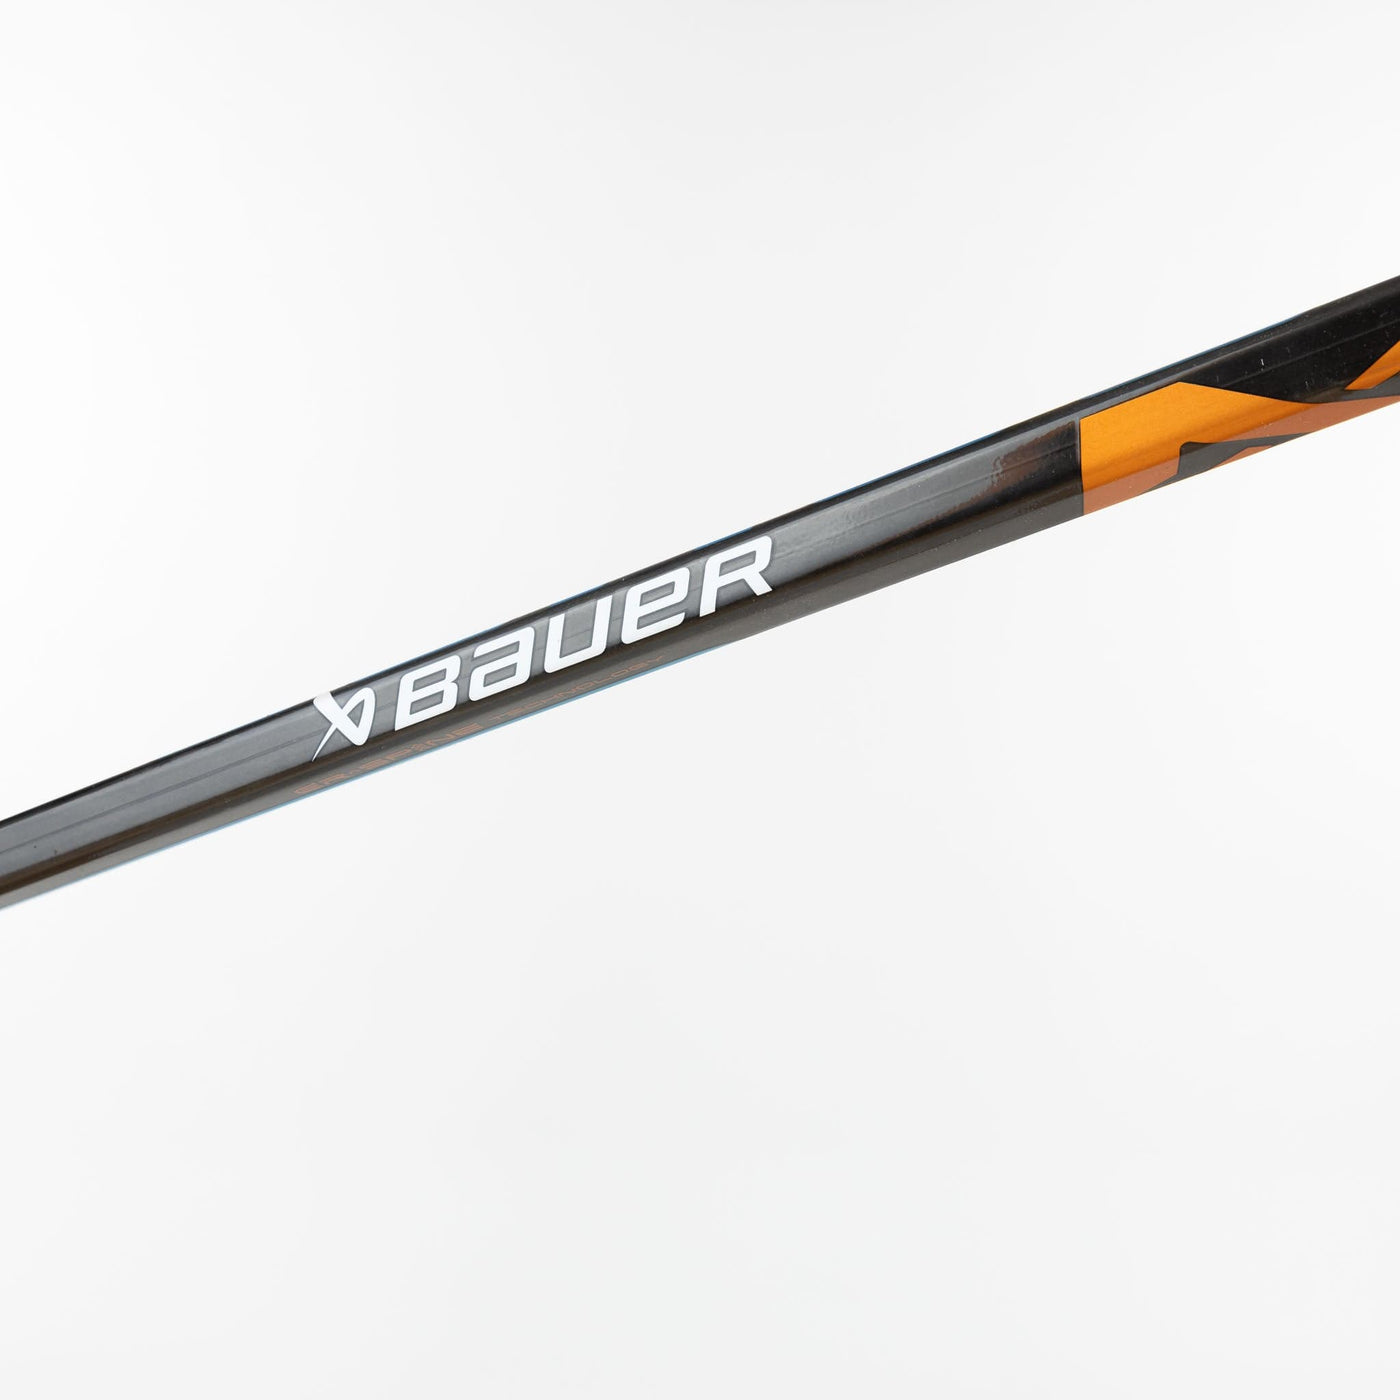 Bauer Nexus E4 Intermediate Hockey Stick - The Hockey Shop Source For Sports